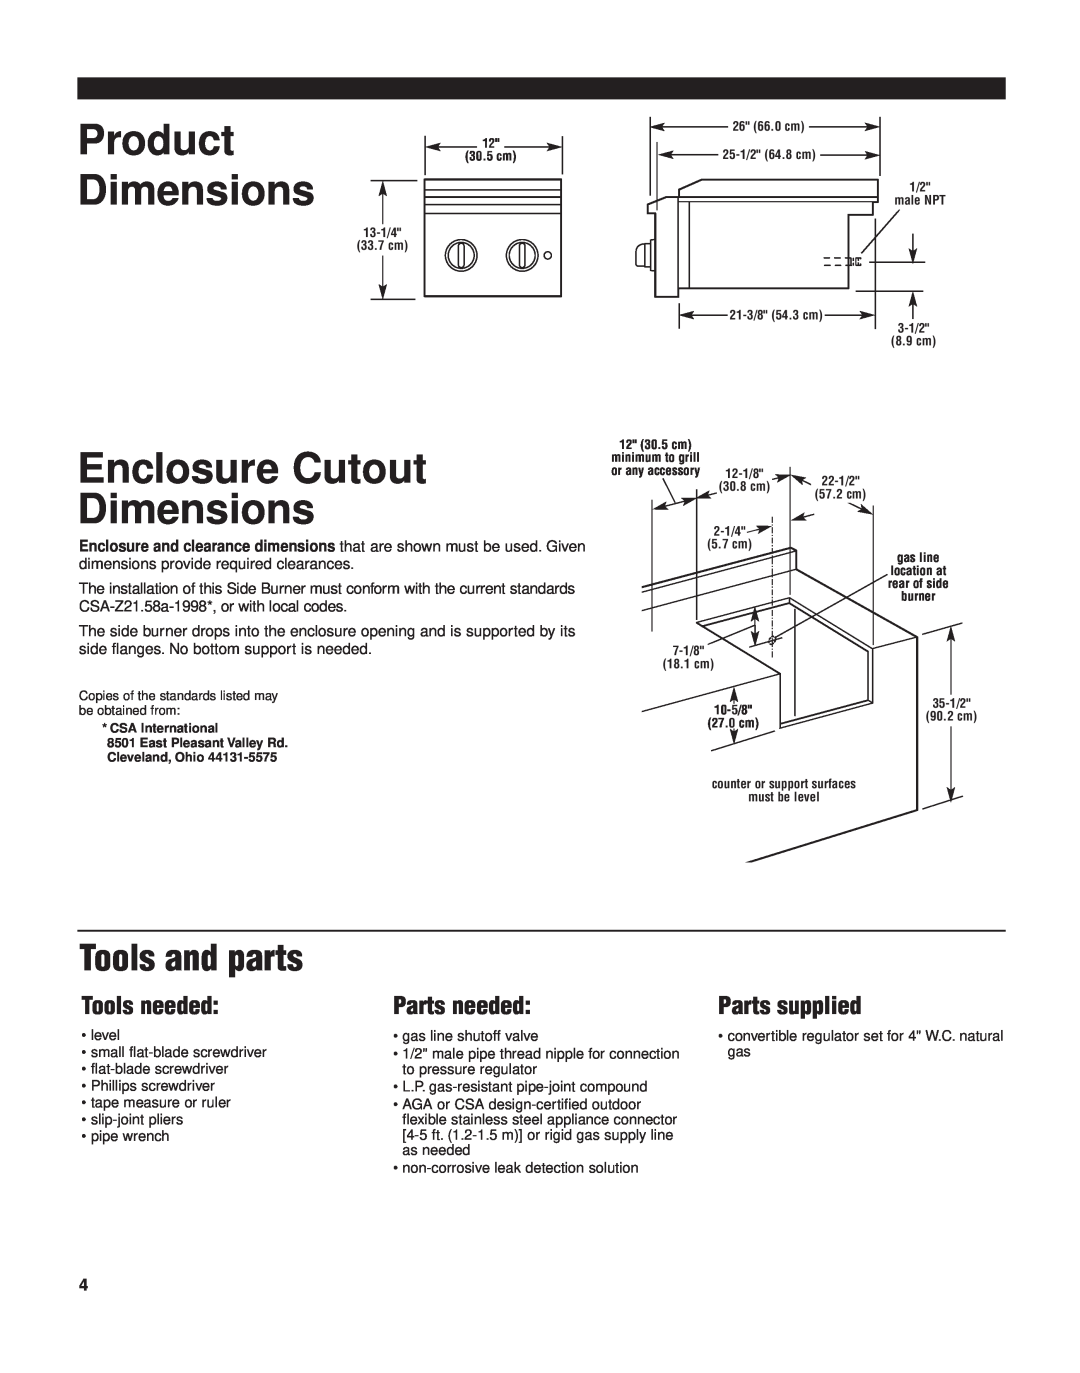 KitchenAid KSBN220 Product Dimensions, Enclosure Cutout Dimensions, Tools and parts, Tools needed, Parts needed 